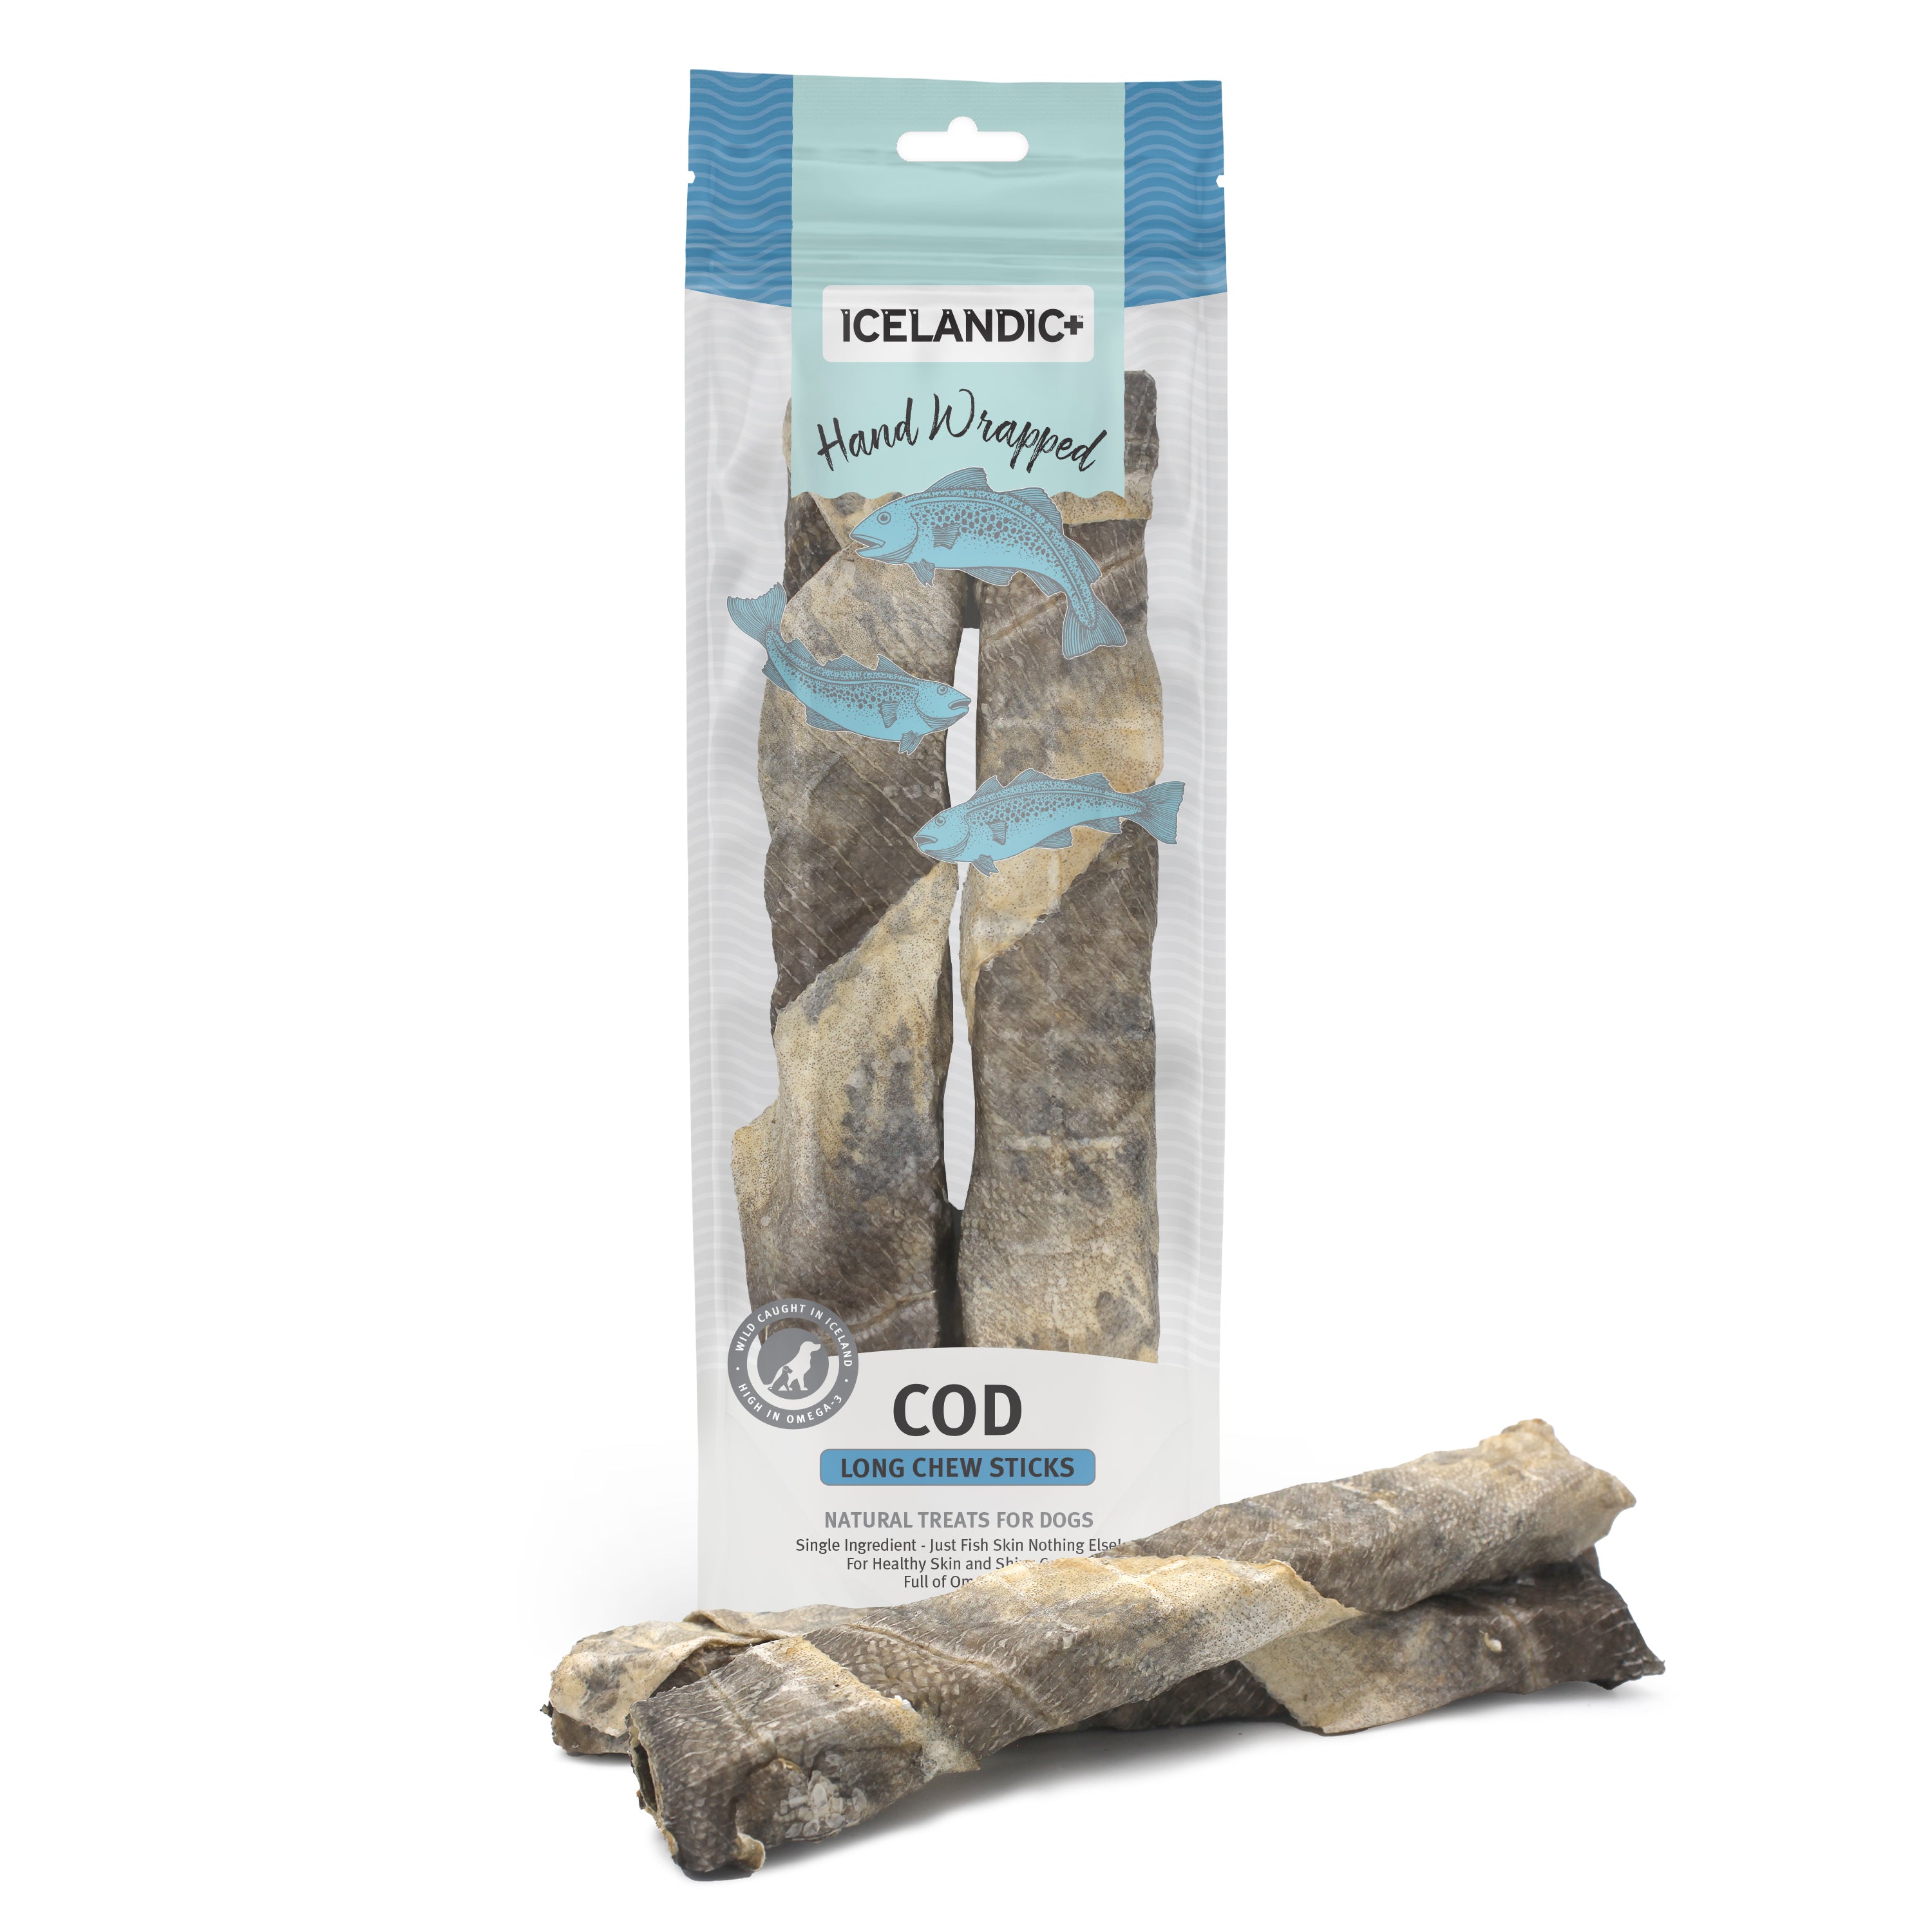 Icelandic+ Cod Skin Hand Wrapped 10 Chew Stick Dog Treat, 2 Pack